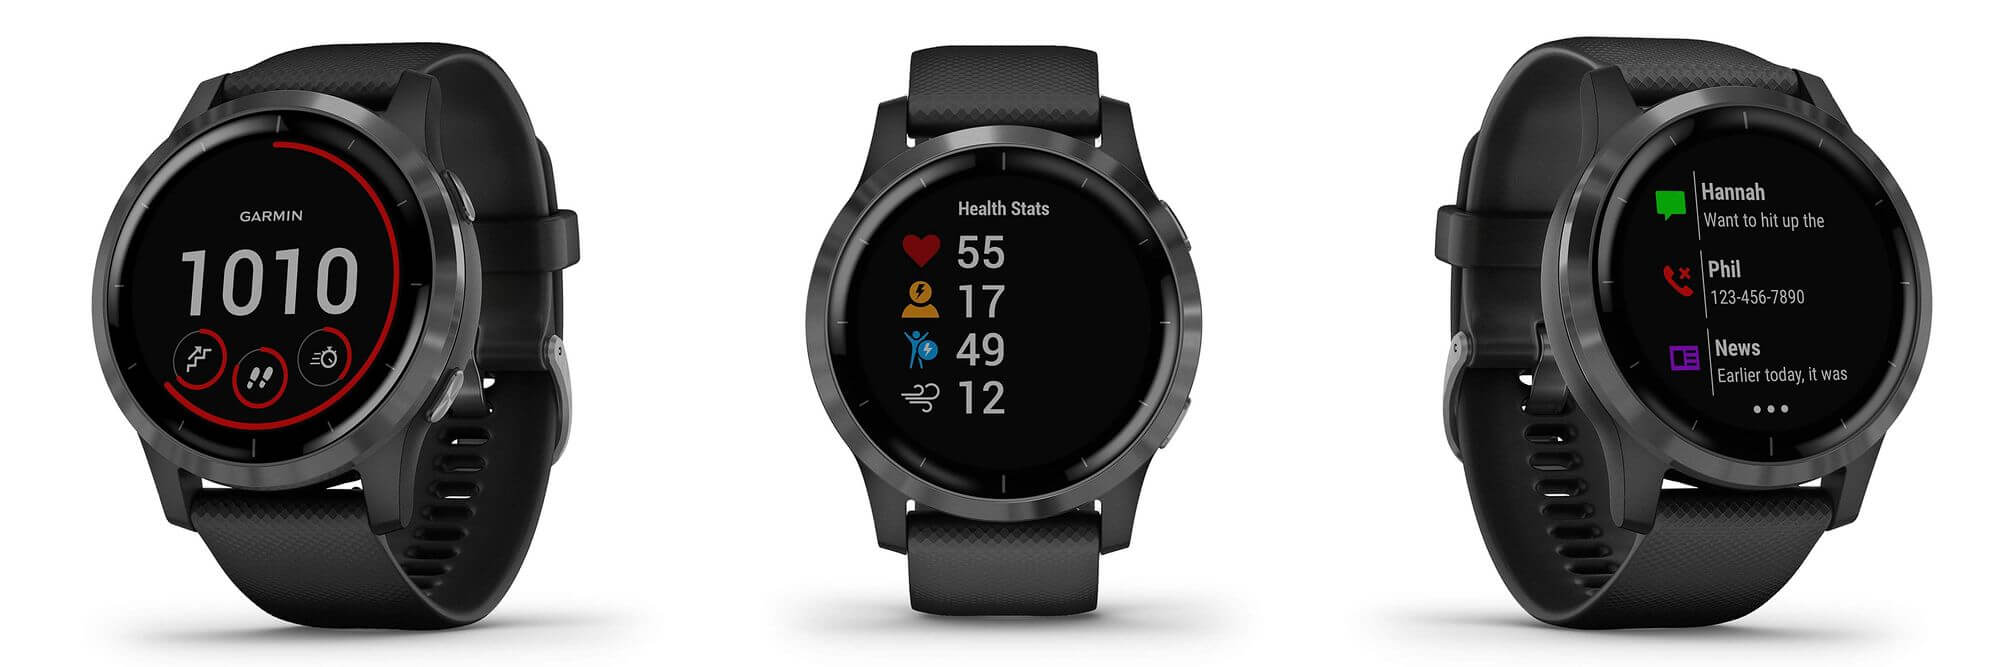 Garmin vivoactive - smartwatch sophisticated health tracking